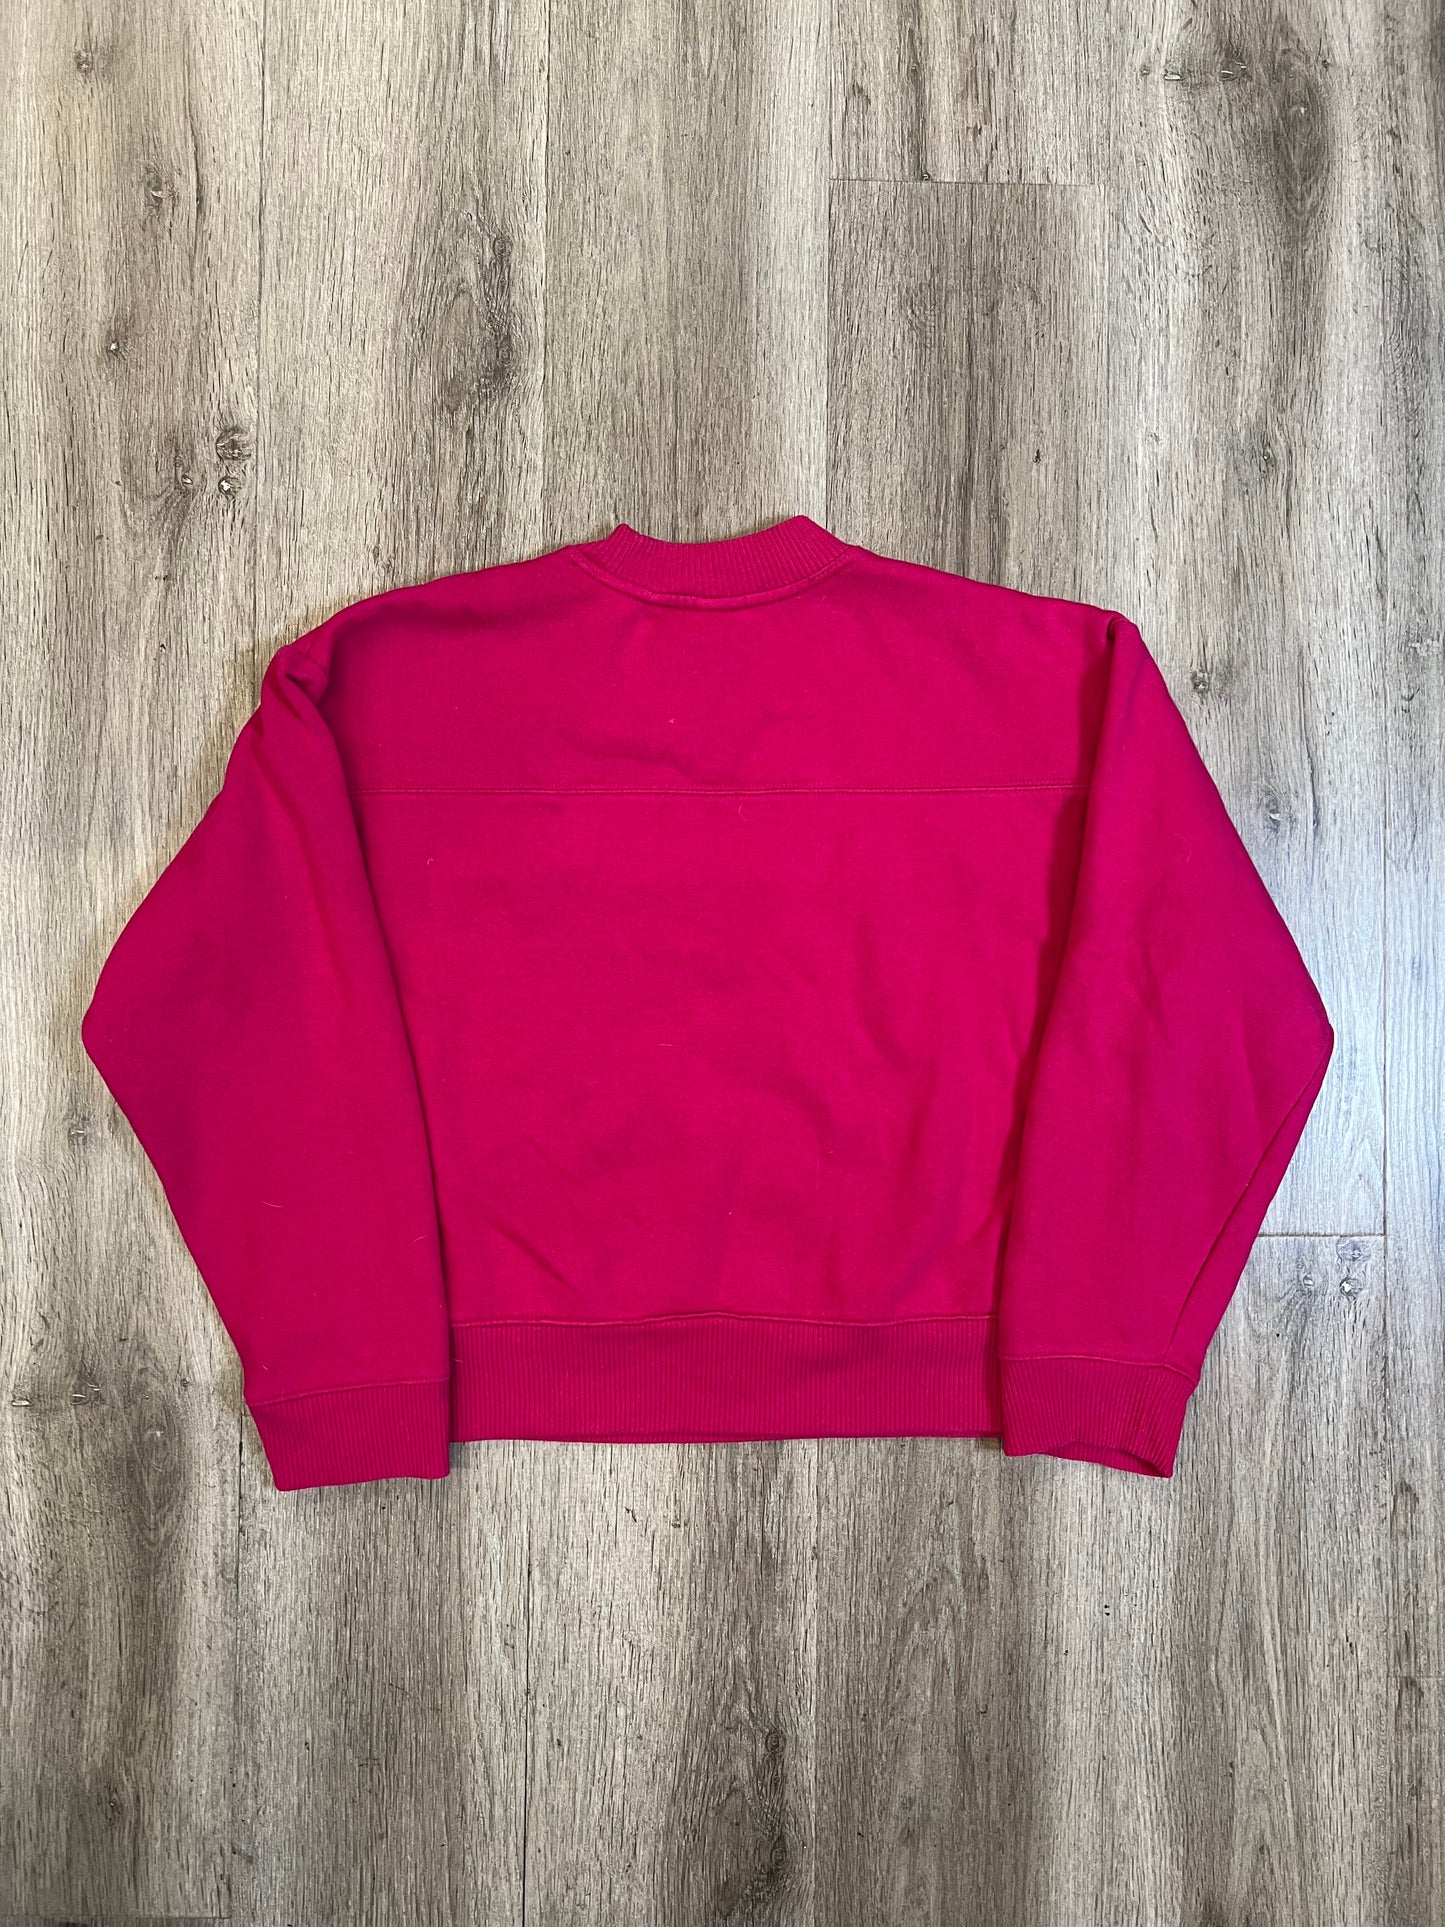 Sweatshirt Crewneck By A New Day  Size: M